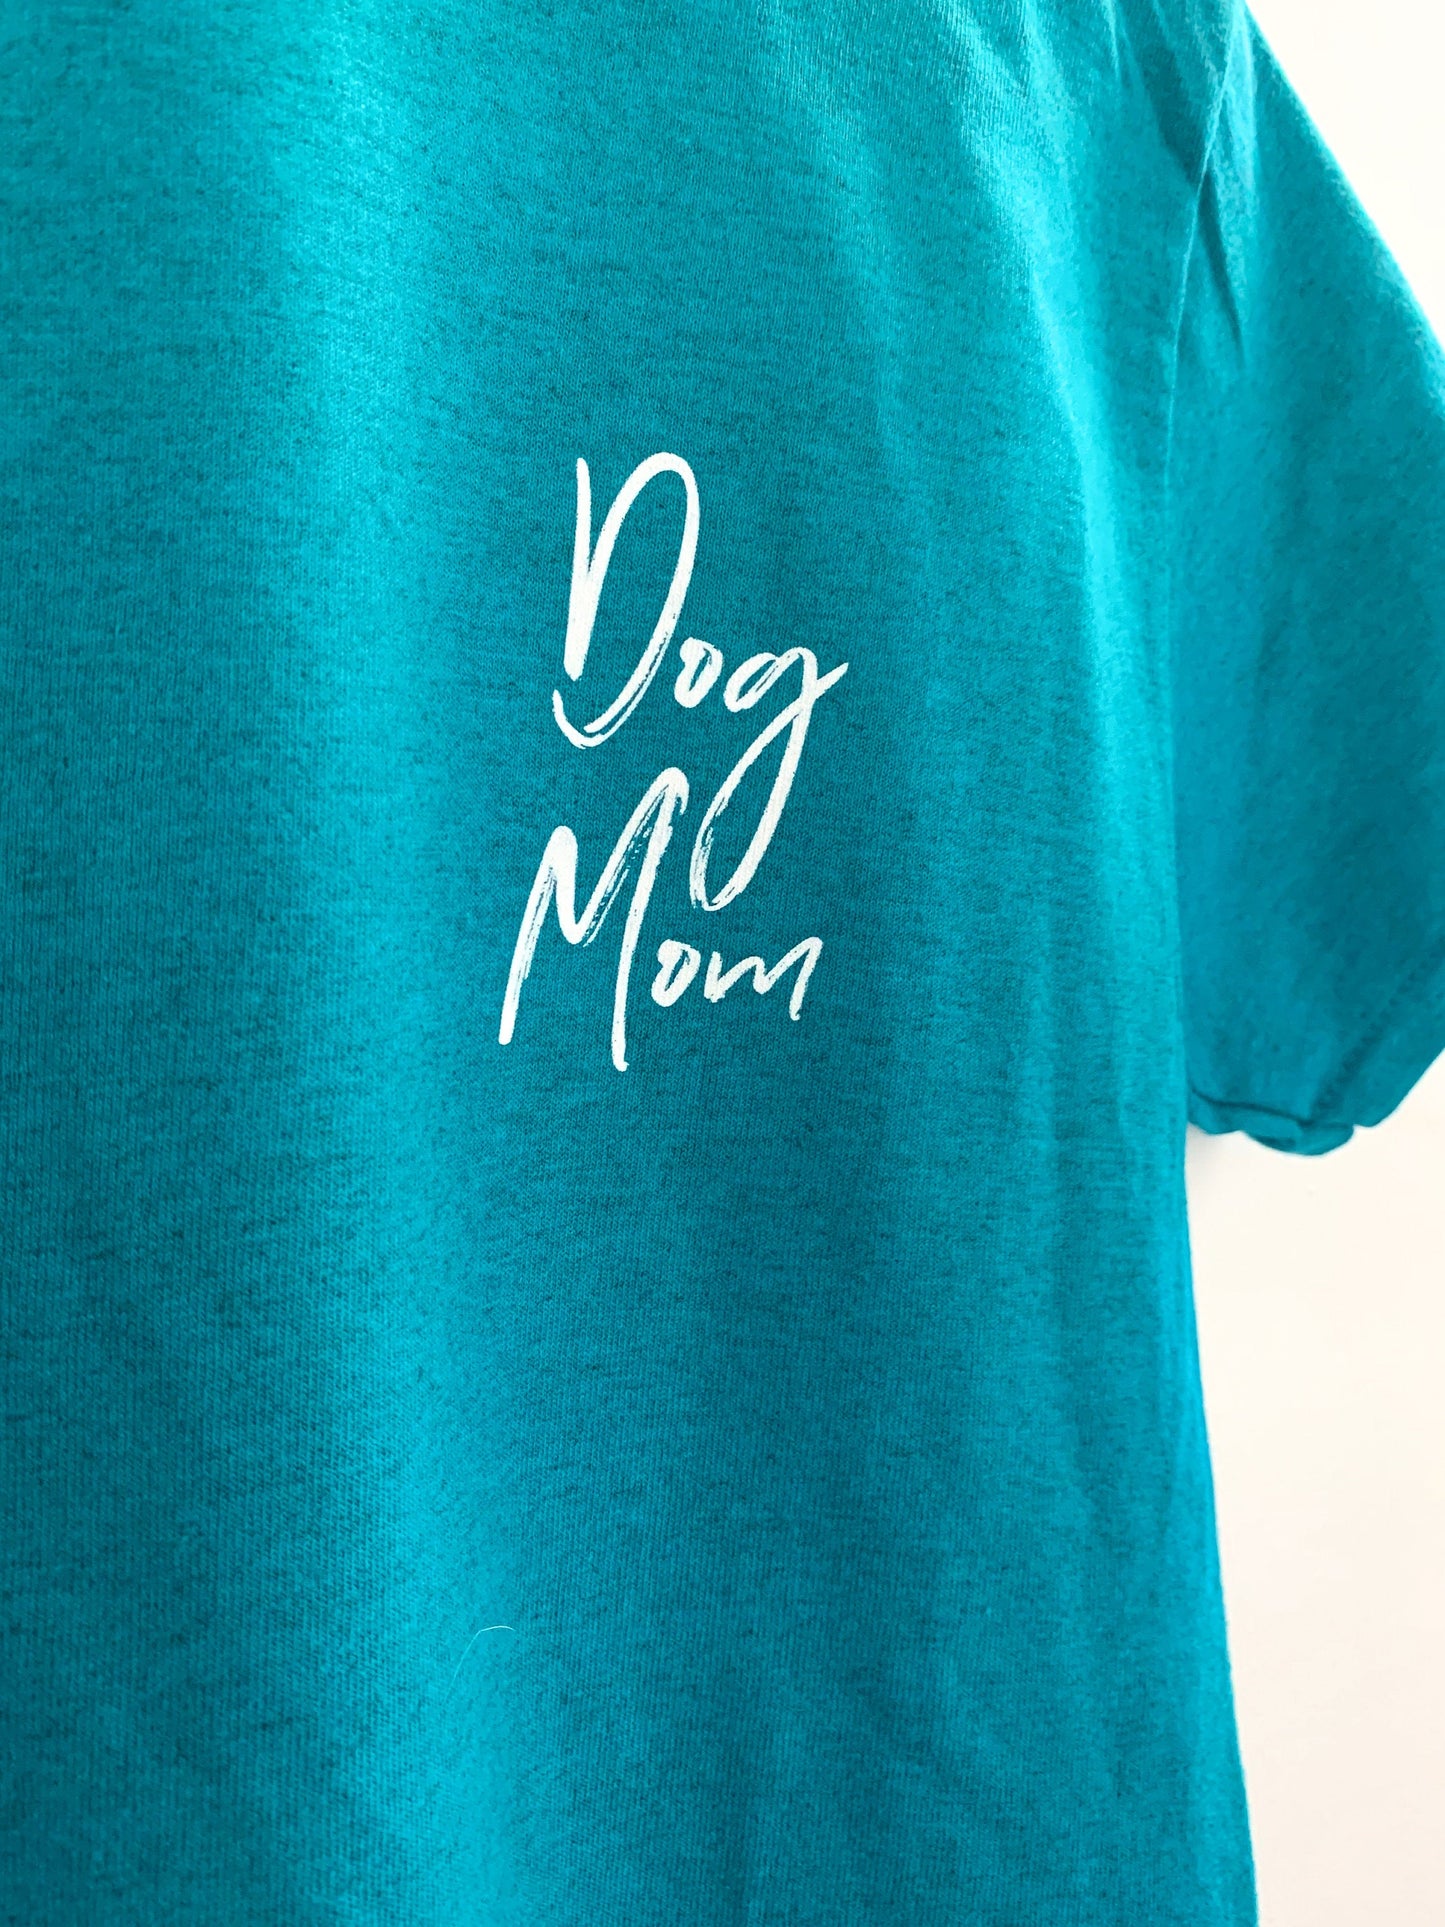 Dog mom t shirt gift for her dog mom af fur mama retro t-shirt minimalist 